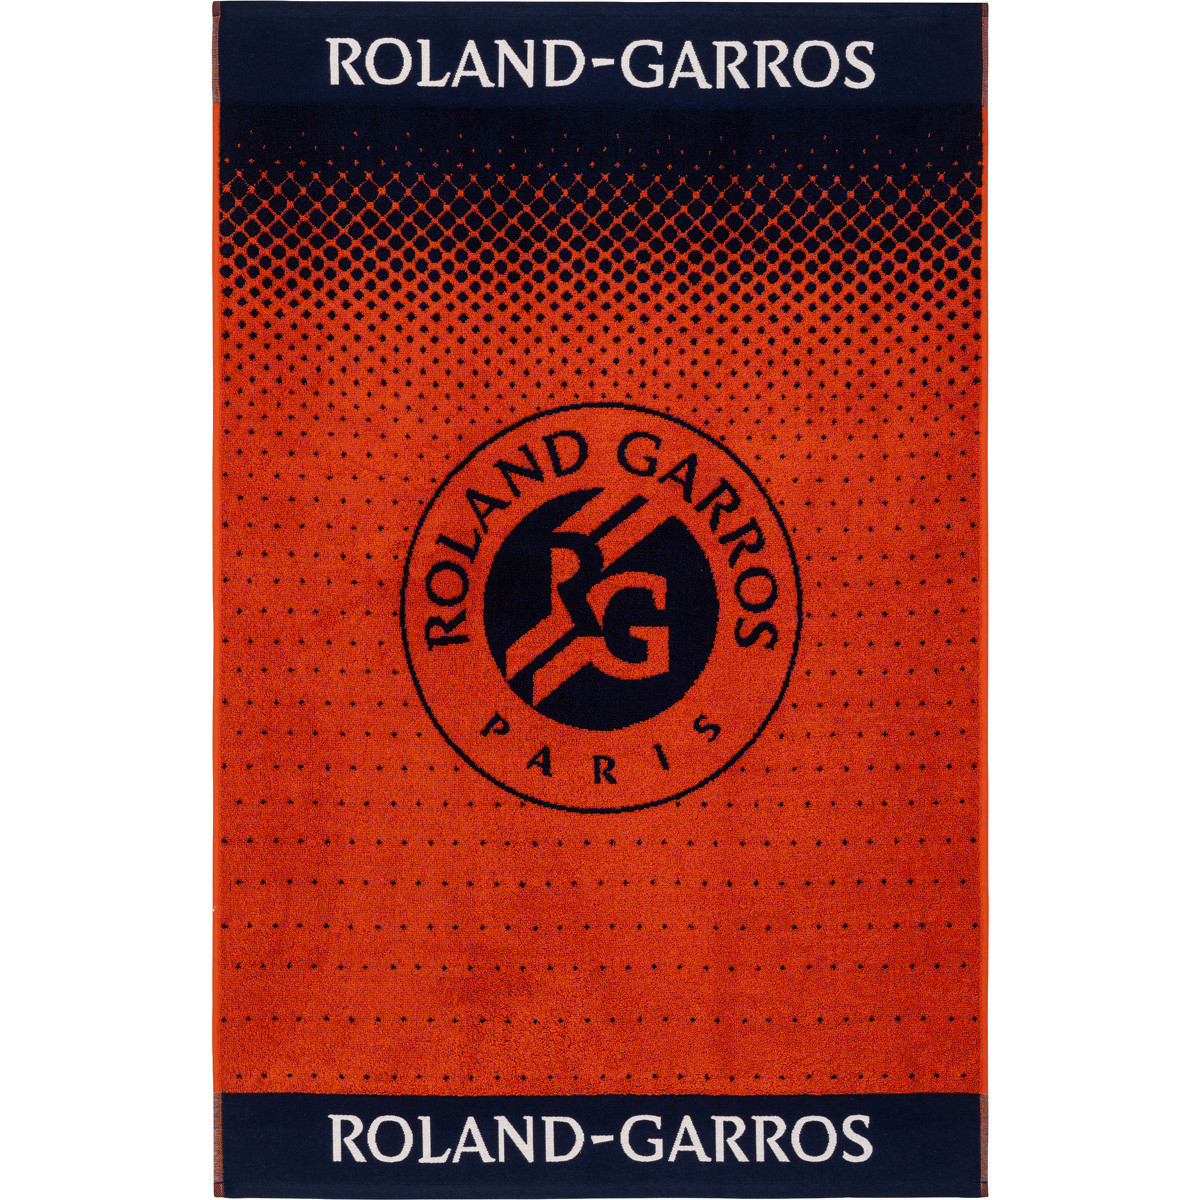 SERVIETTE ROLAND GARROS LOGO OFFICIELLE RG (70 X 105 CM)